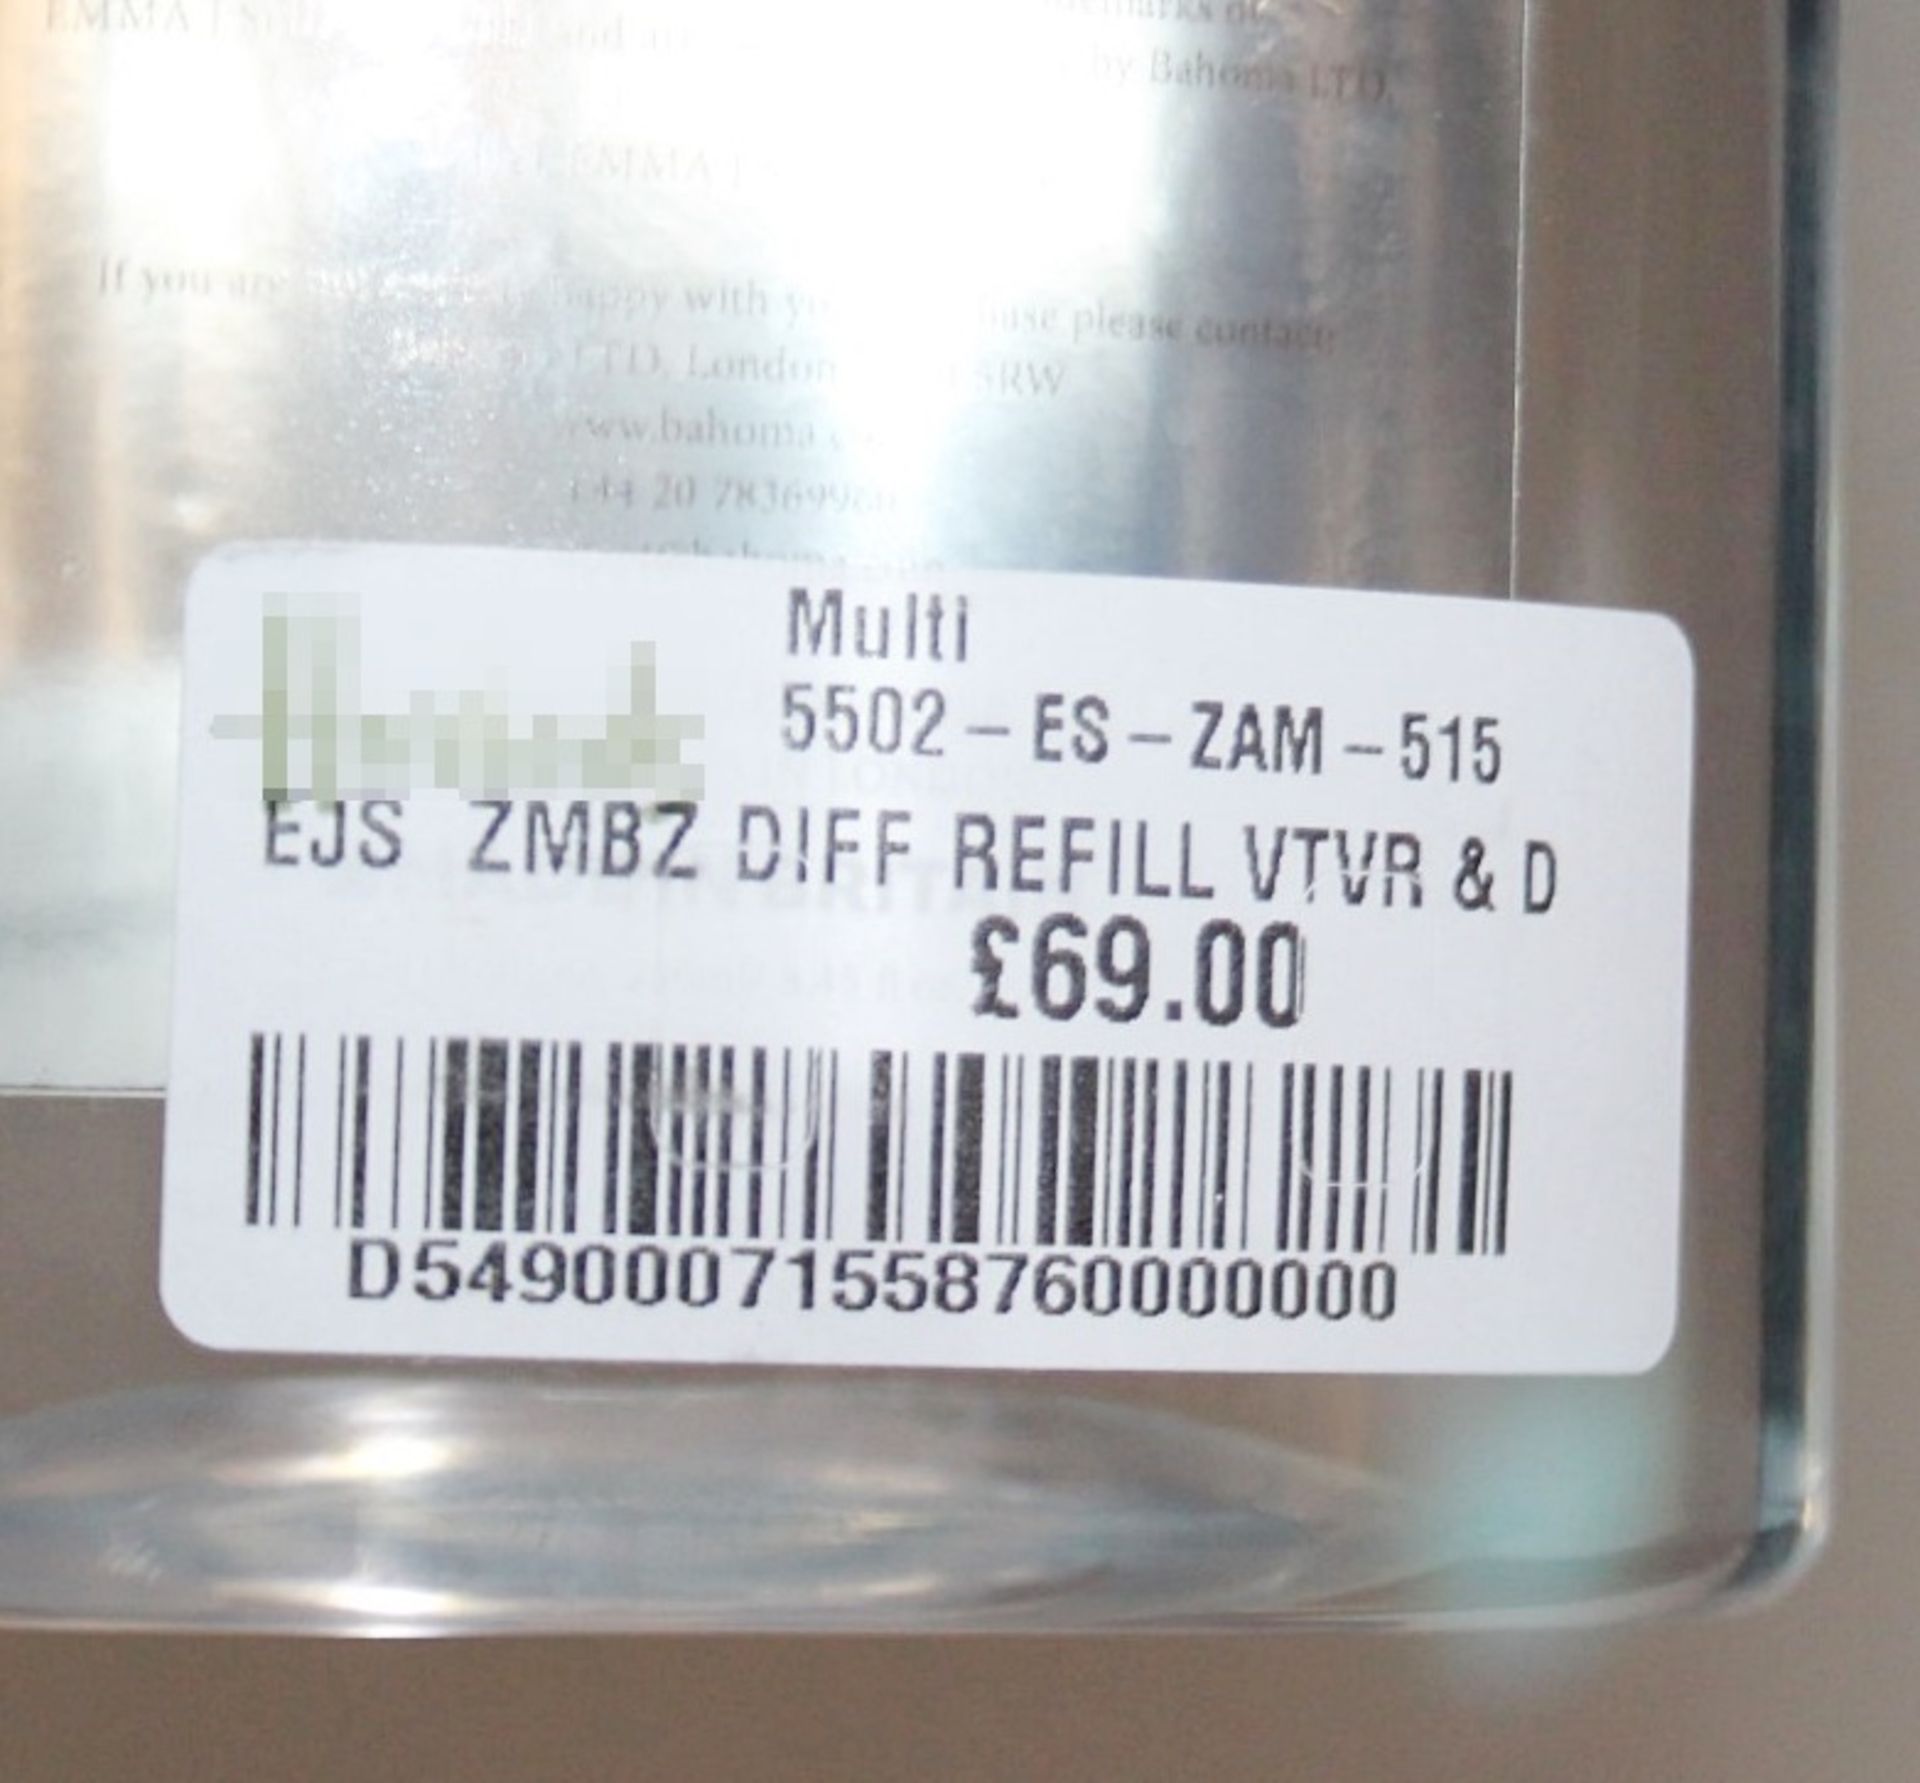 1 x EMMA J SHIPLEY 'Zambezi' Diffuser Refill (500ml) - New / Unused Stock - Original Price £69.00 - Image 3 of 3